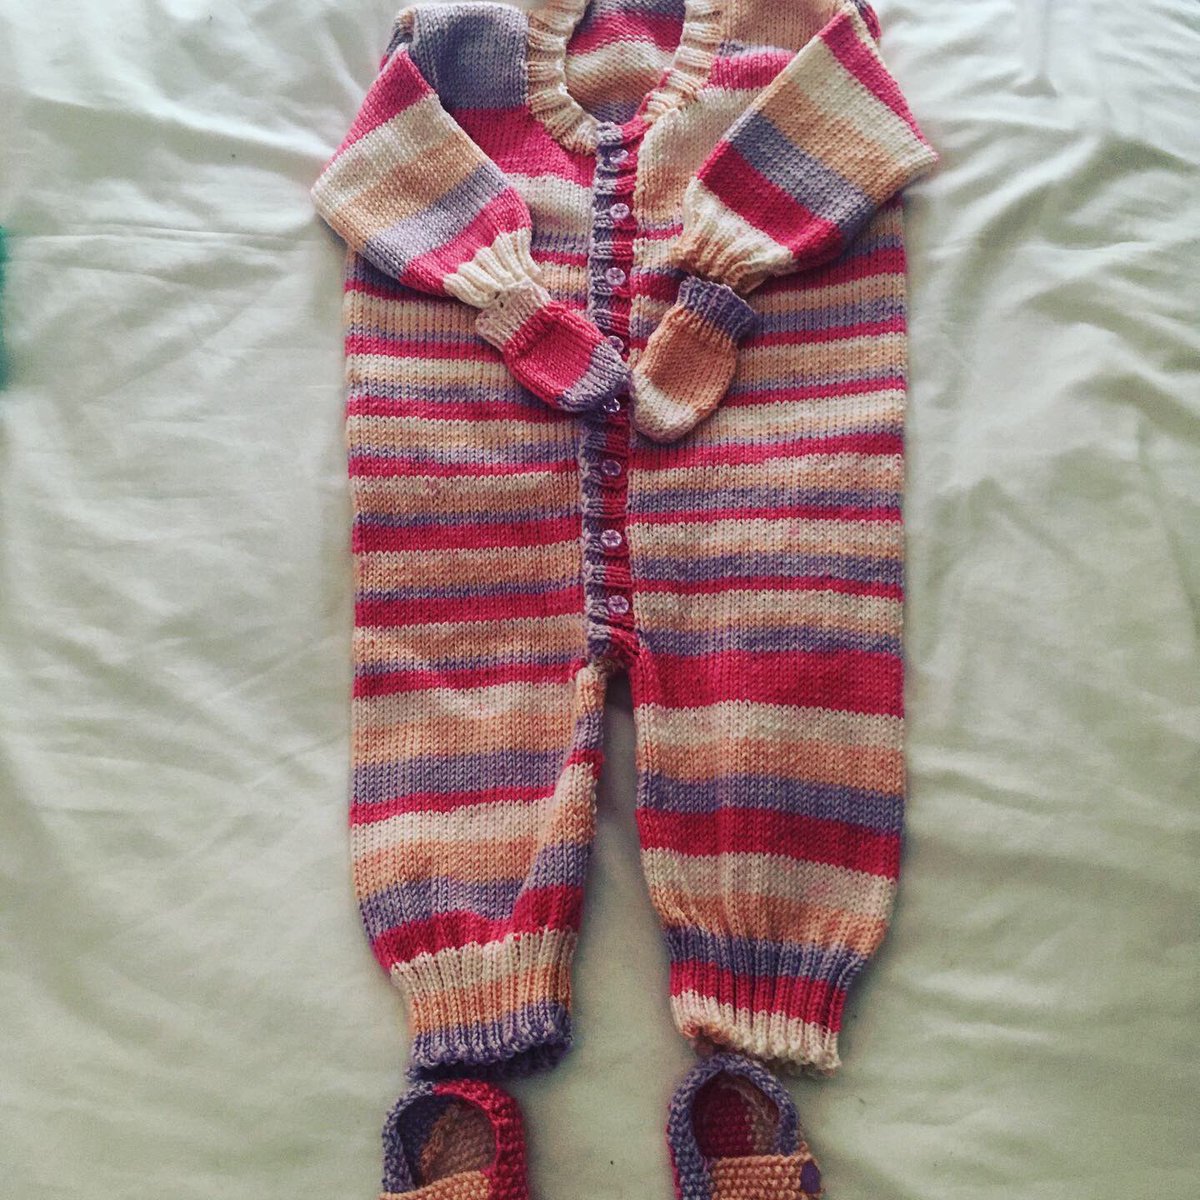 Two new #babyonesies and #accessories for my new grandniece! #handknit #handknitted #babygift #handmade #handcrafted #handicraft #madewithlove #knitting #yarn #wiyarn #hobbycraft #lovetoknit